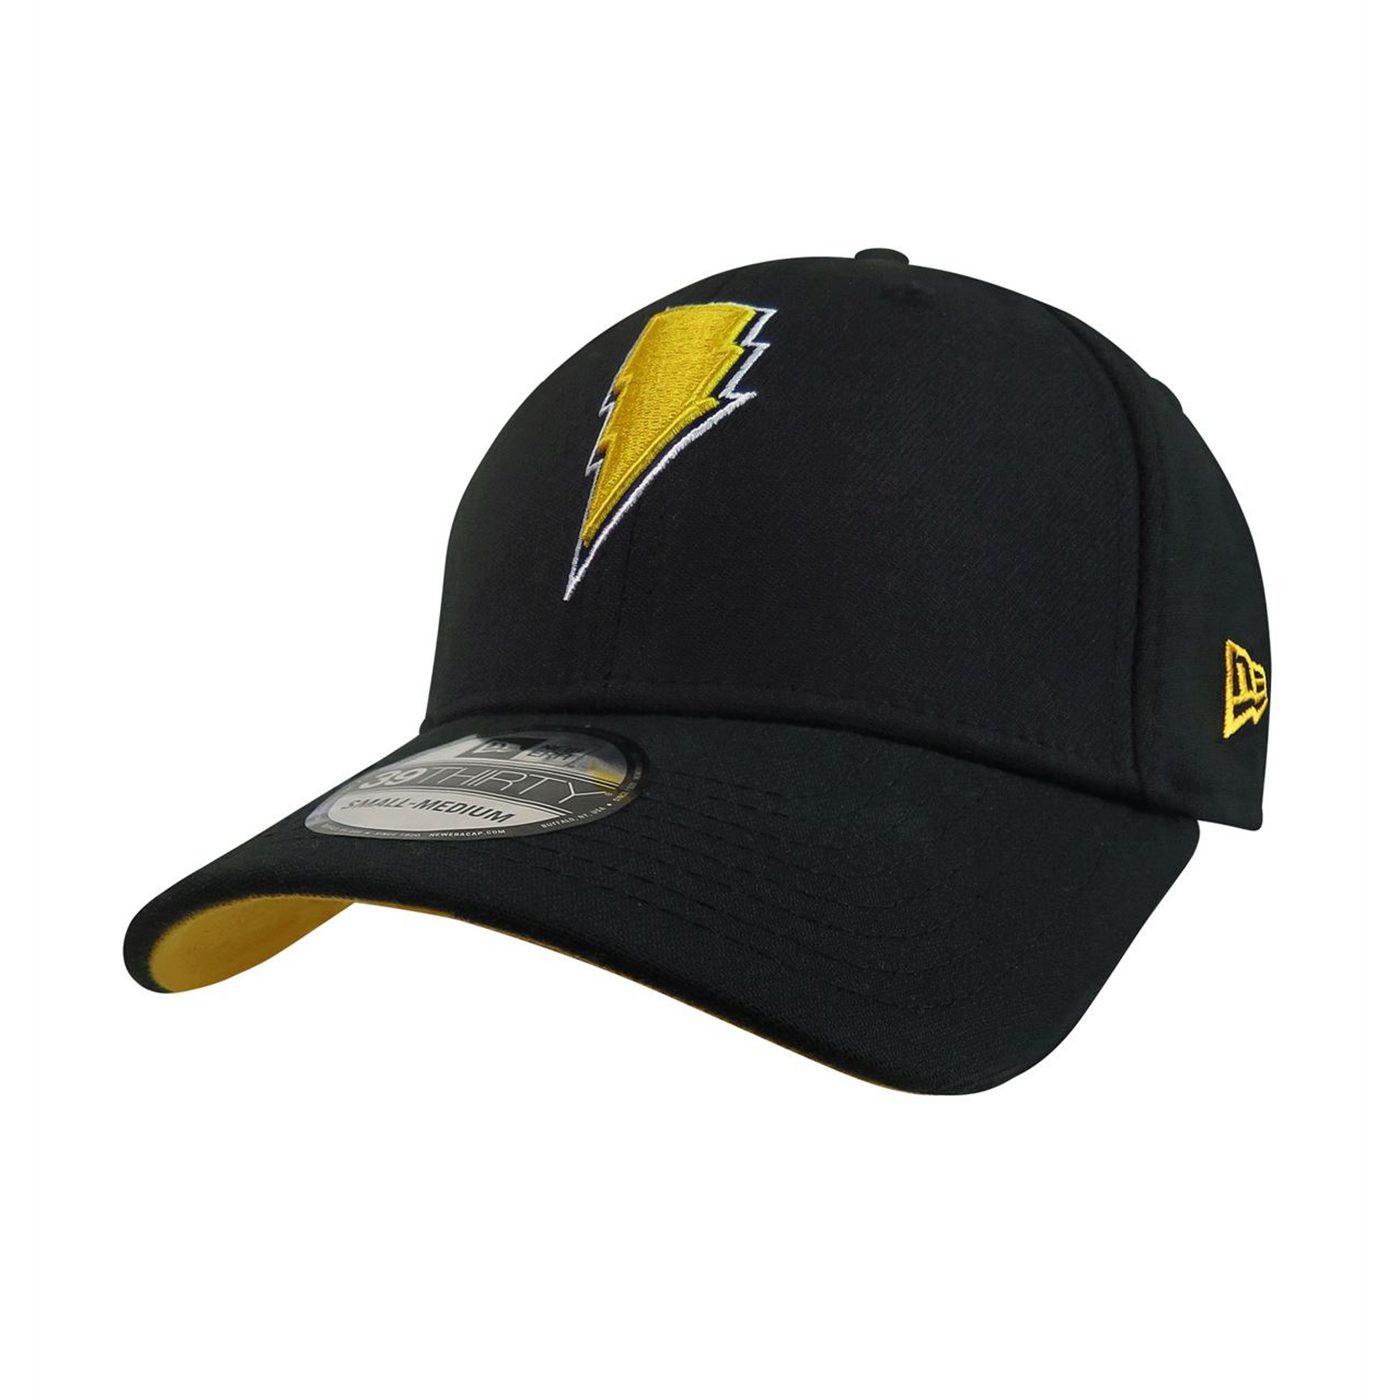 Black Adam Lightning 39Thirty Fitted Hat